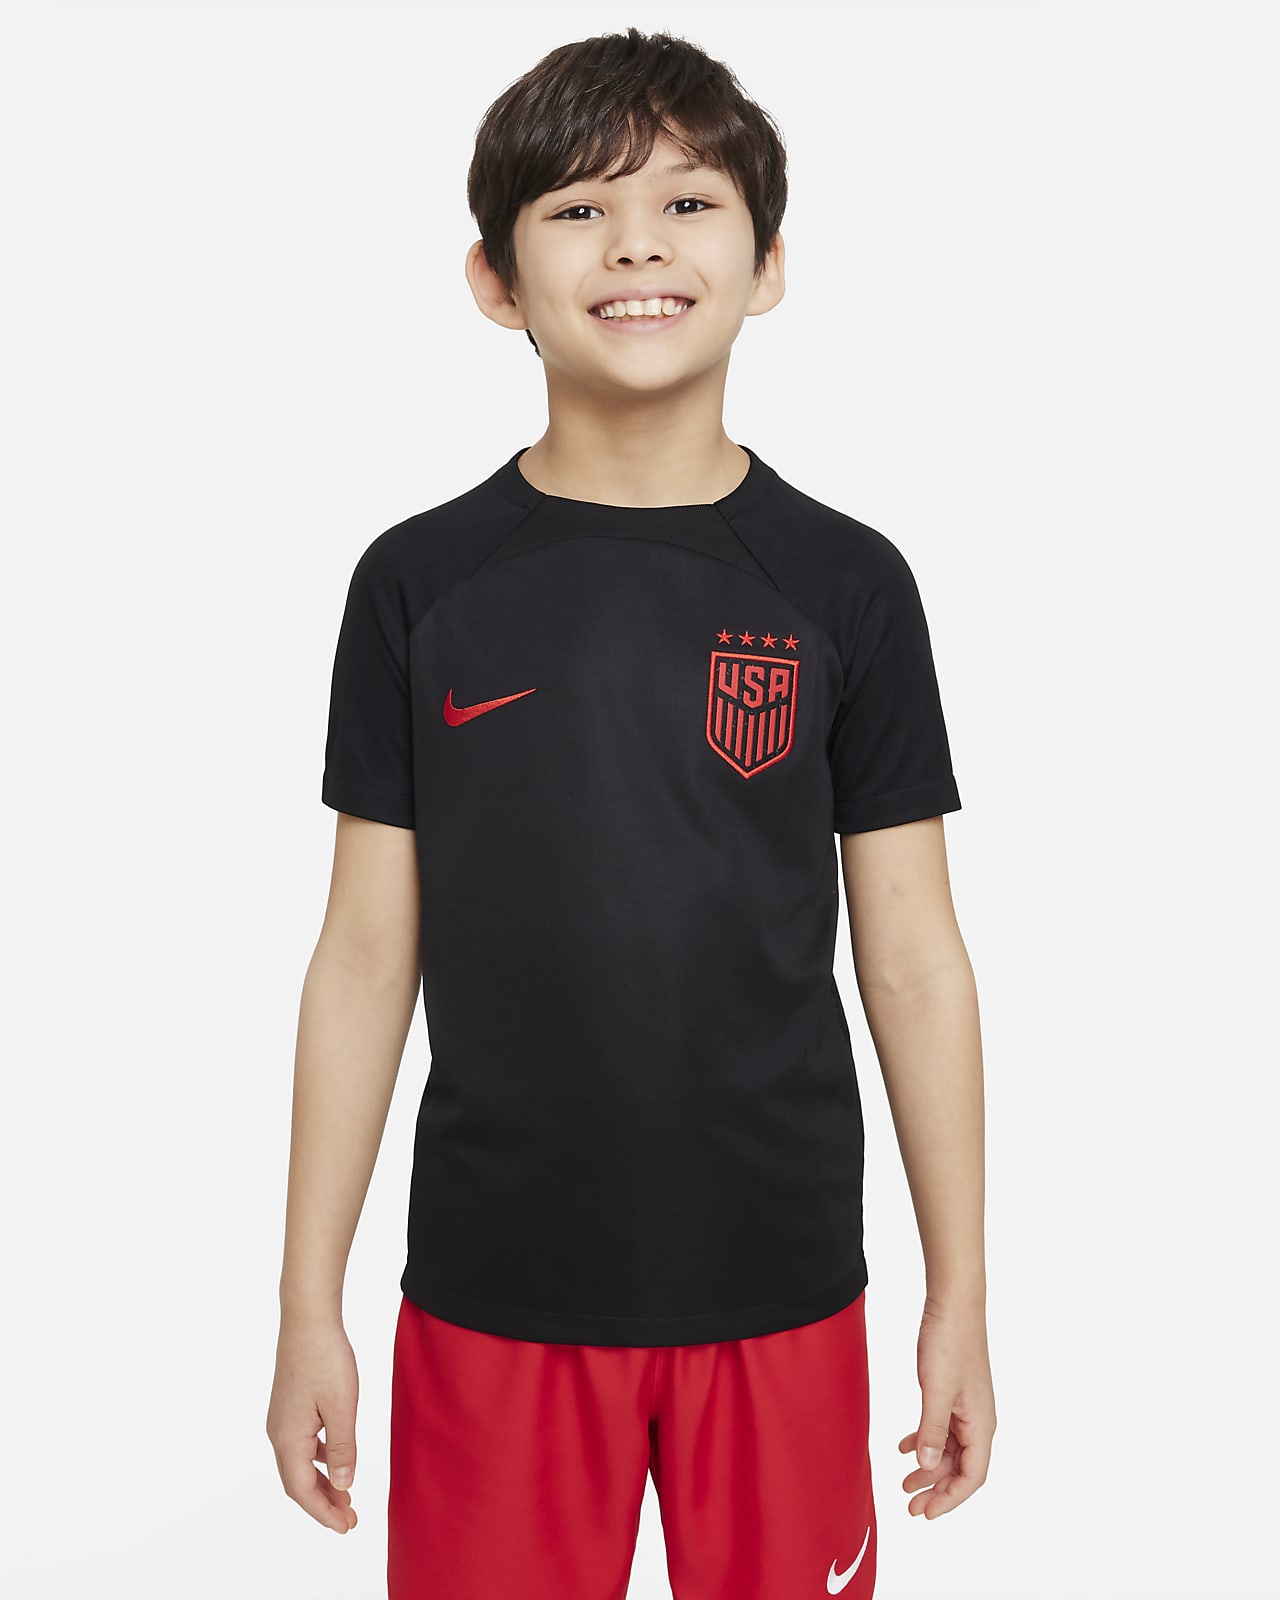 U.S. Academy Pro Big Kids' Nike Dri-FIT Short-Sleeve Soccer Top